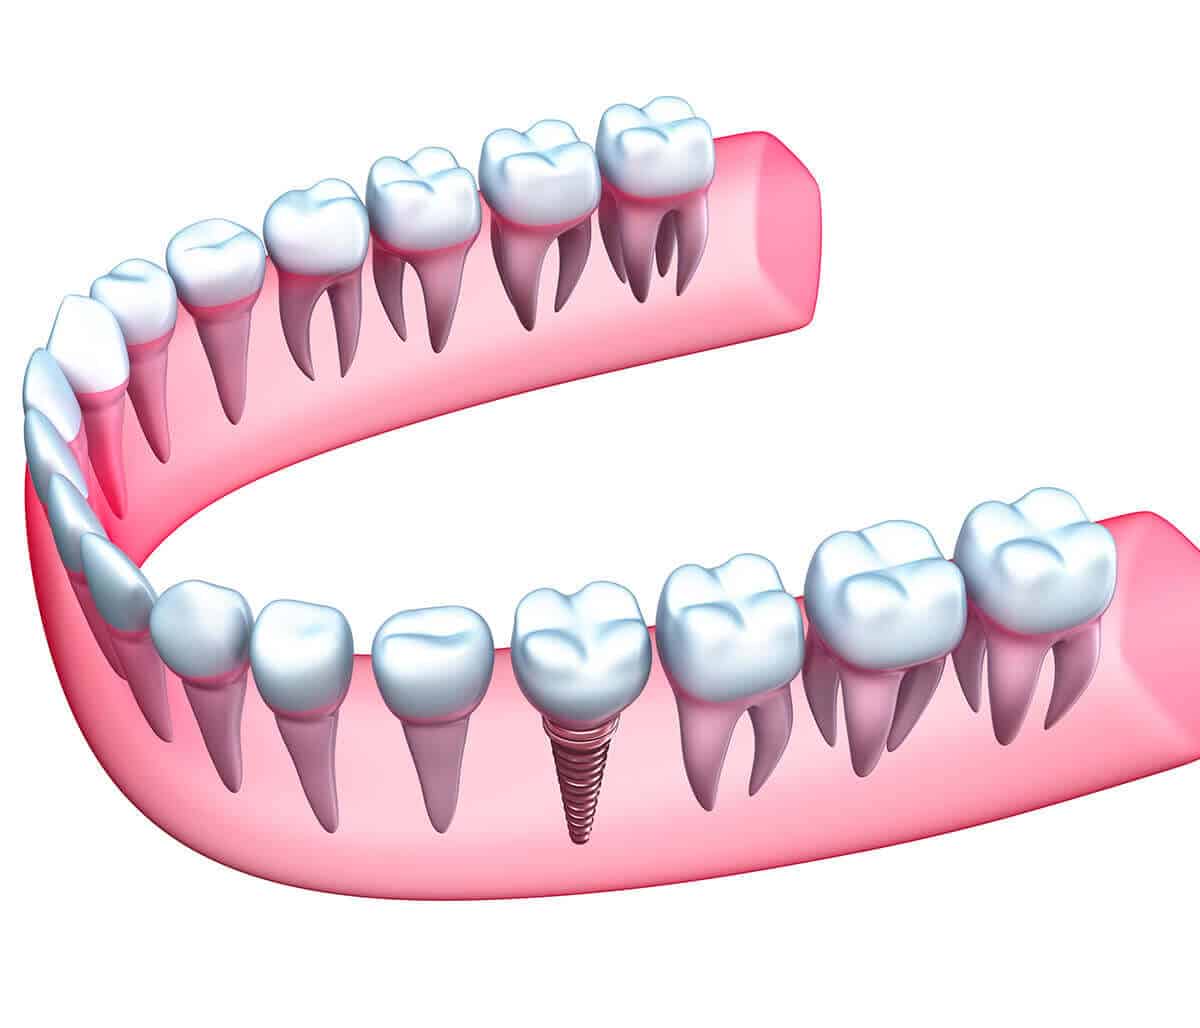 Implants for Teeth at Innovative Dental in Philadelphia Area